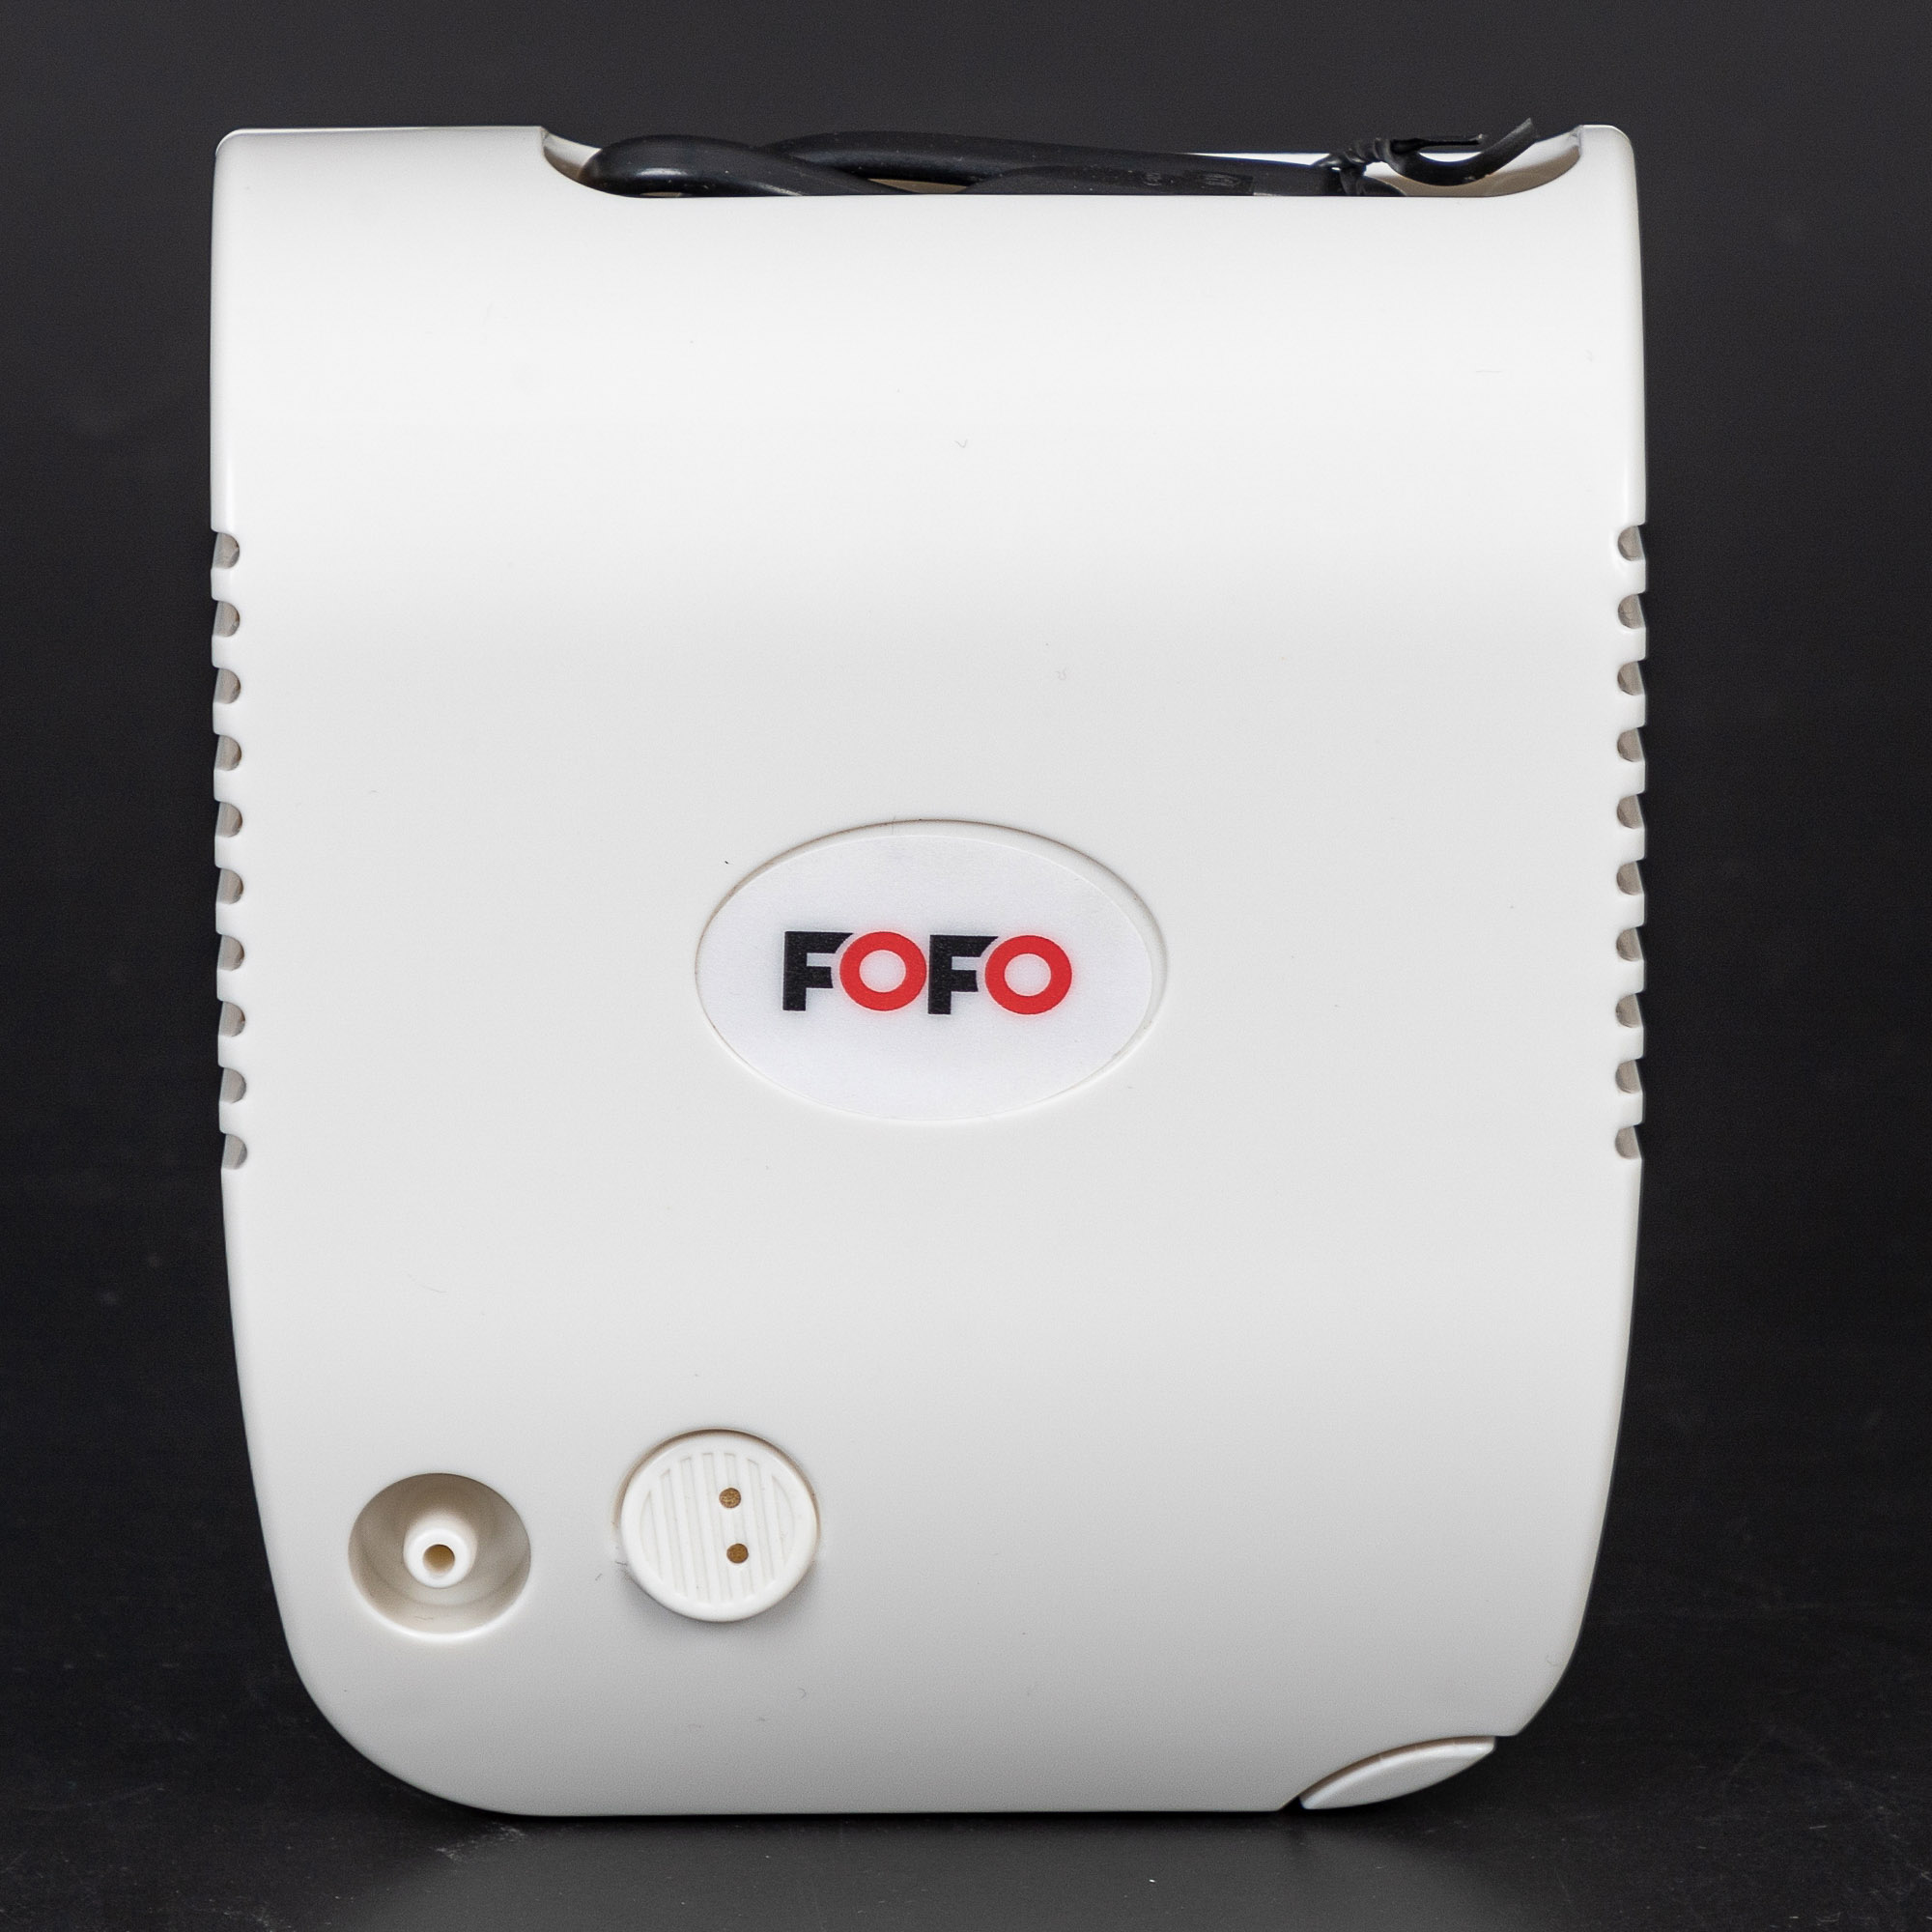 Nebulizador de compresión portátil de la máquina nebulizadora FOFO para uso doméstico